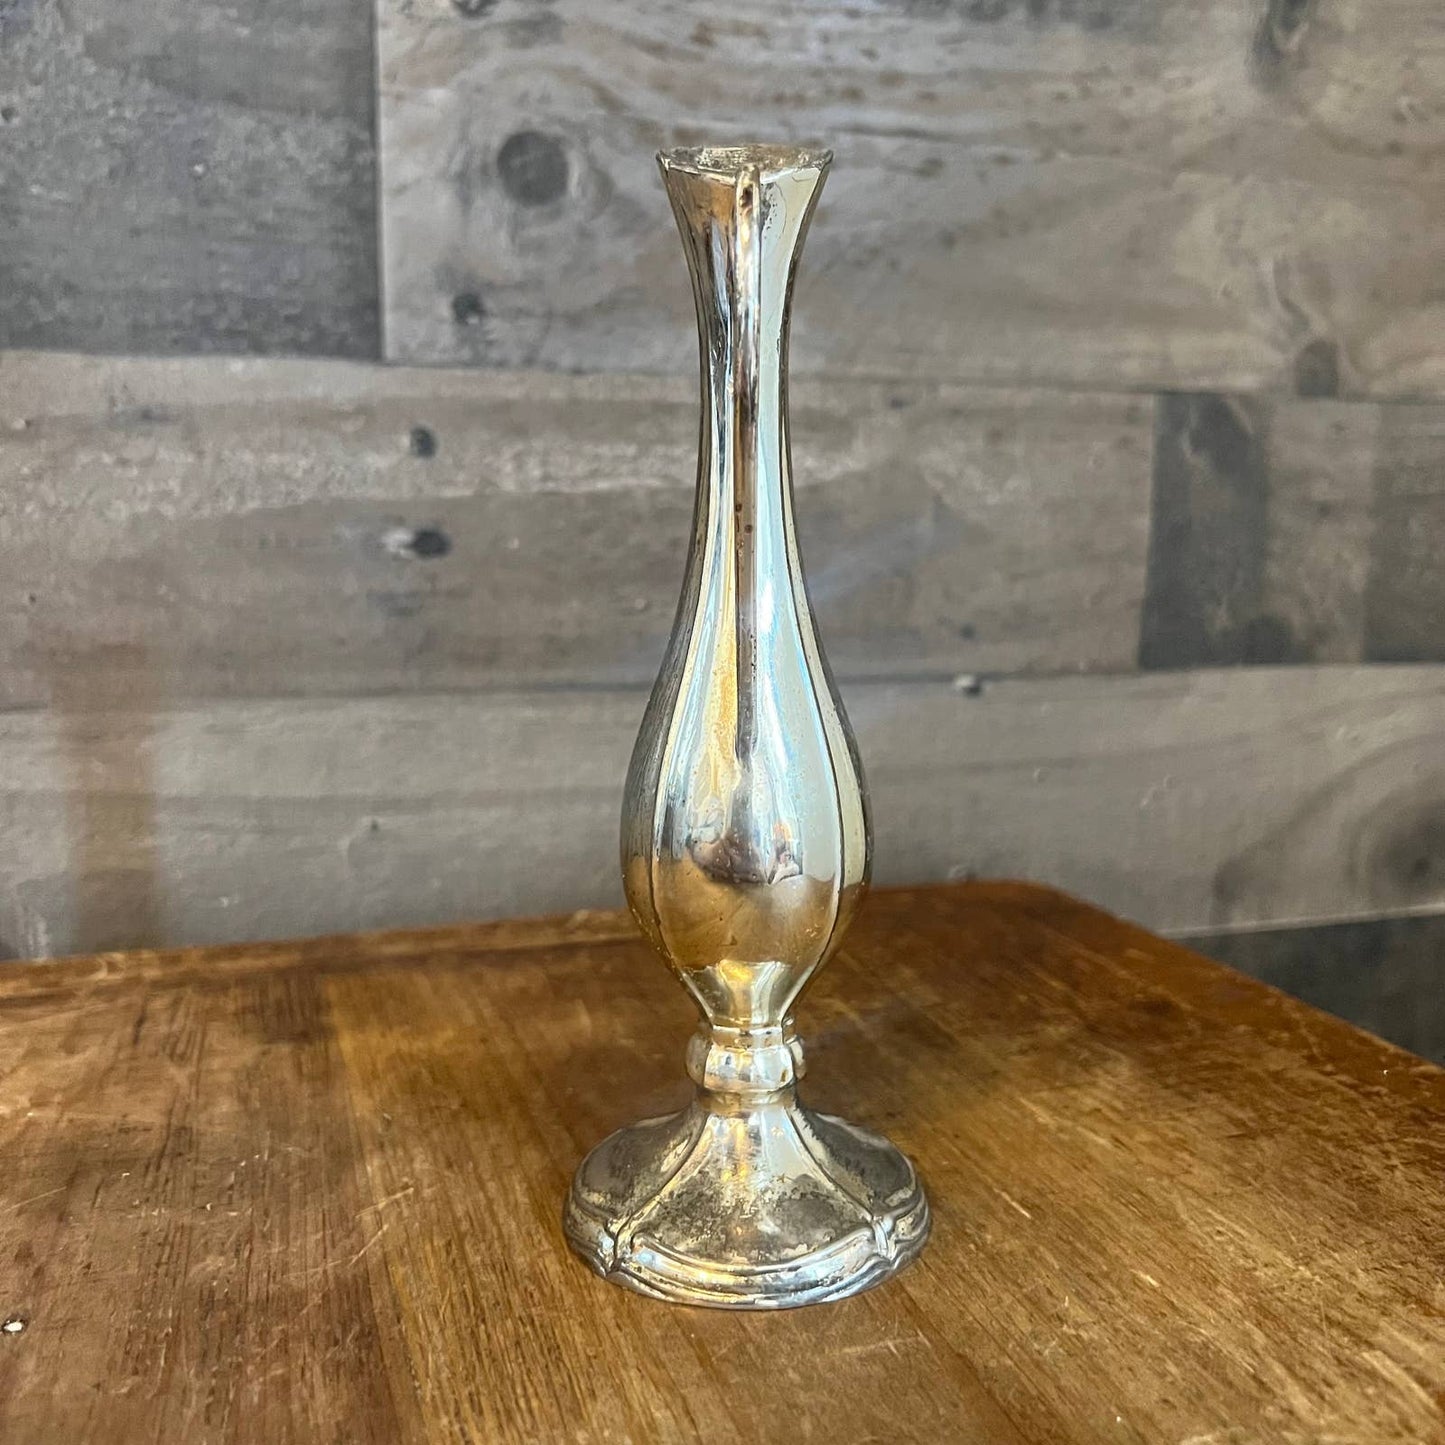 Vintage silver plated handled bud vase